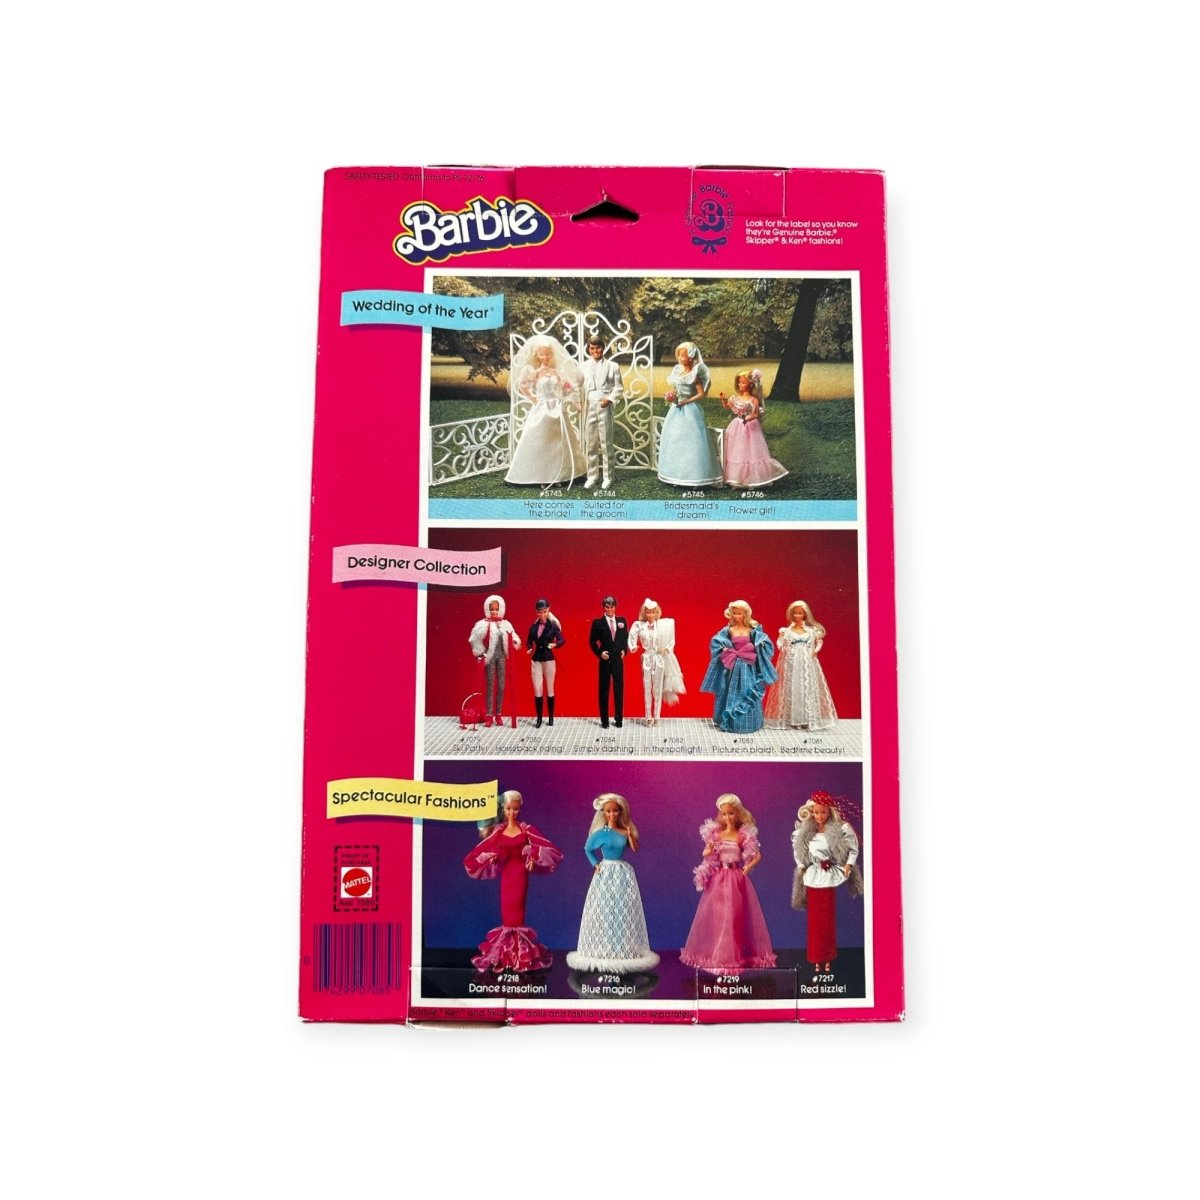 VINTAGE Mattel Barbie Designer Collection Picture in Plaid NRFB Fashion #7083 1983 US Version - Simon's Collectibles